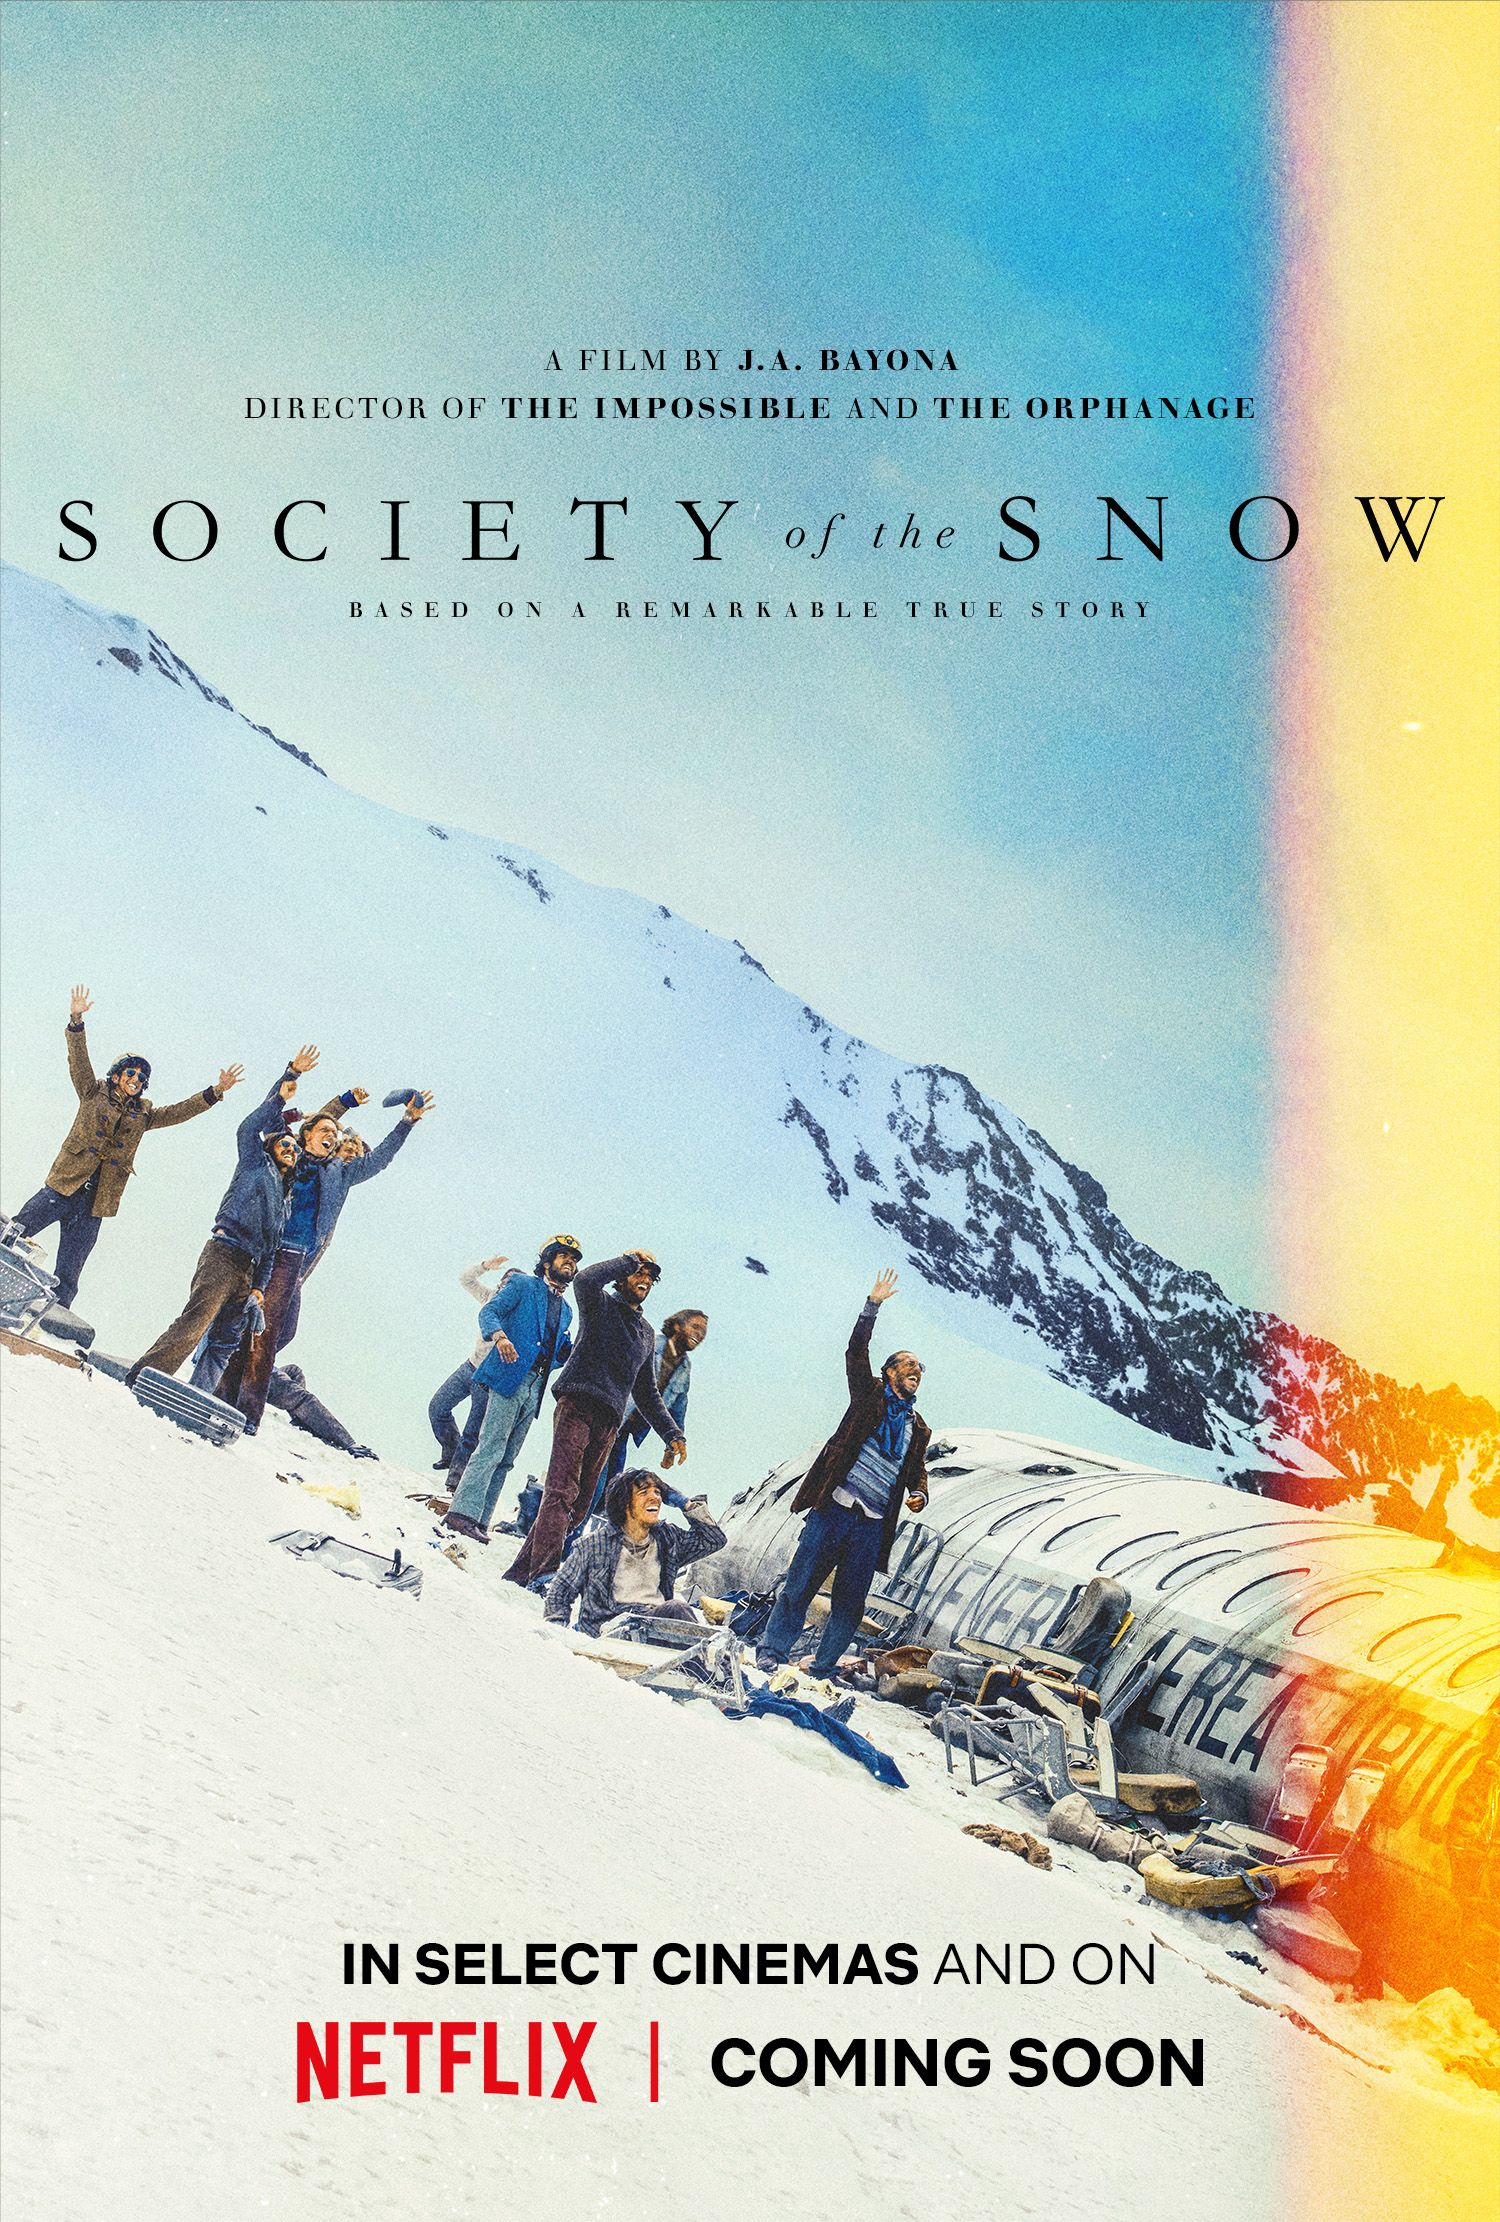 La sociedad de la nieve - Pablo Vierci - E-Book - BookBeat